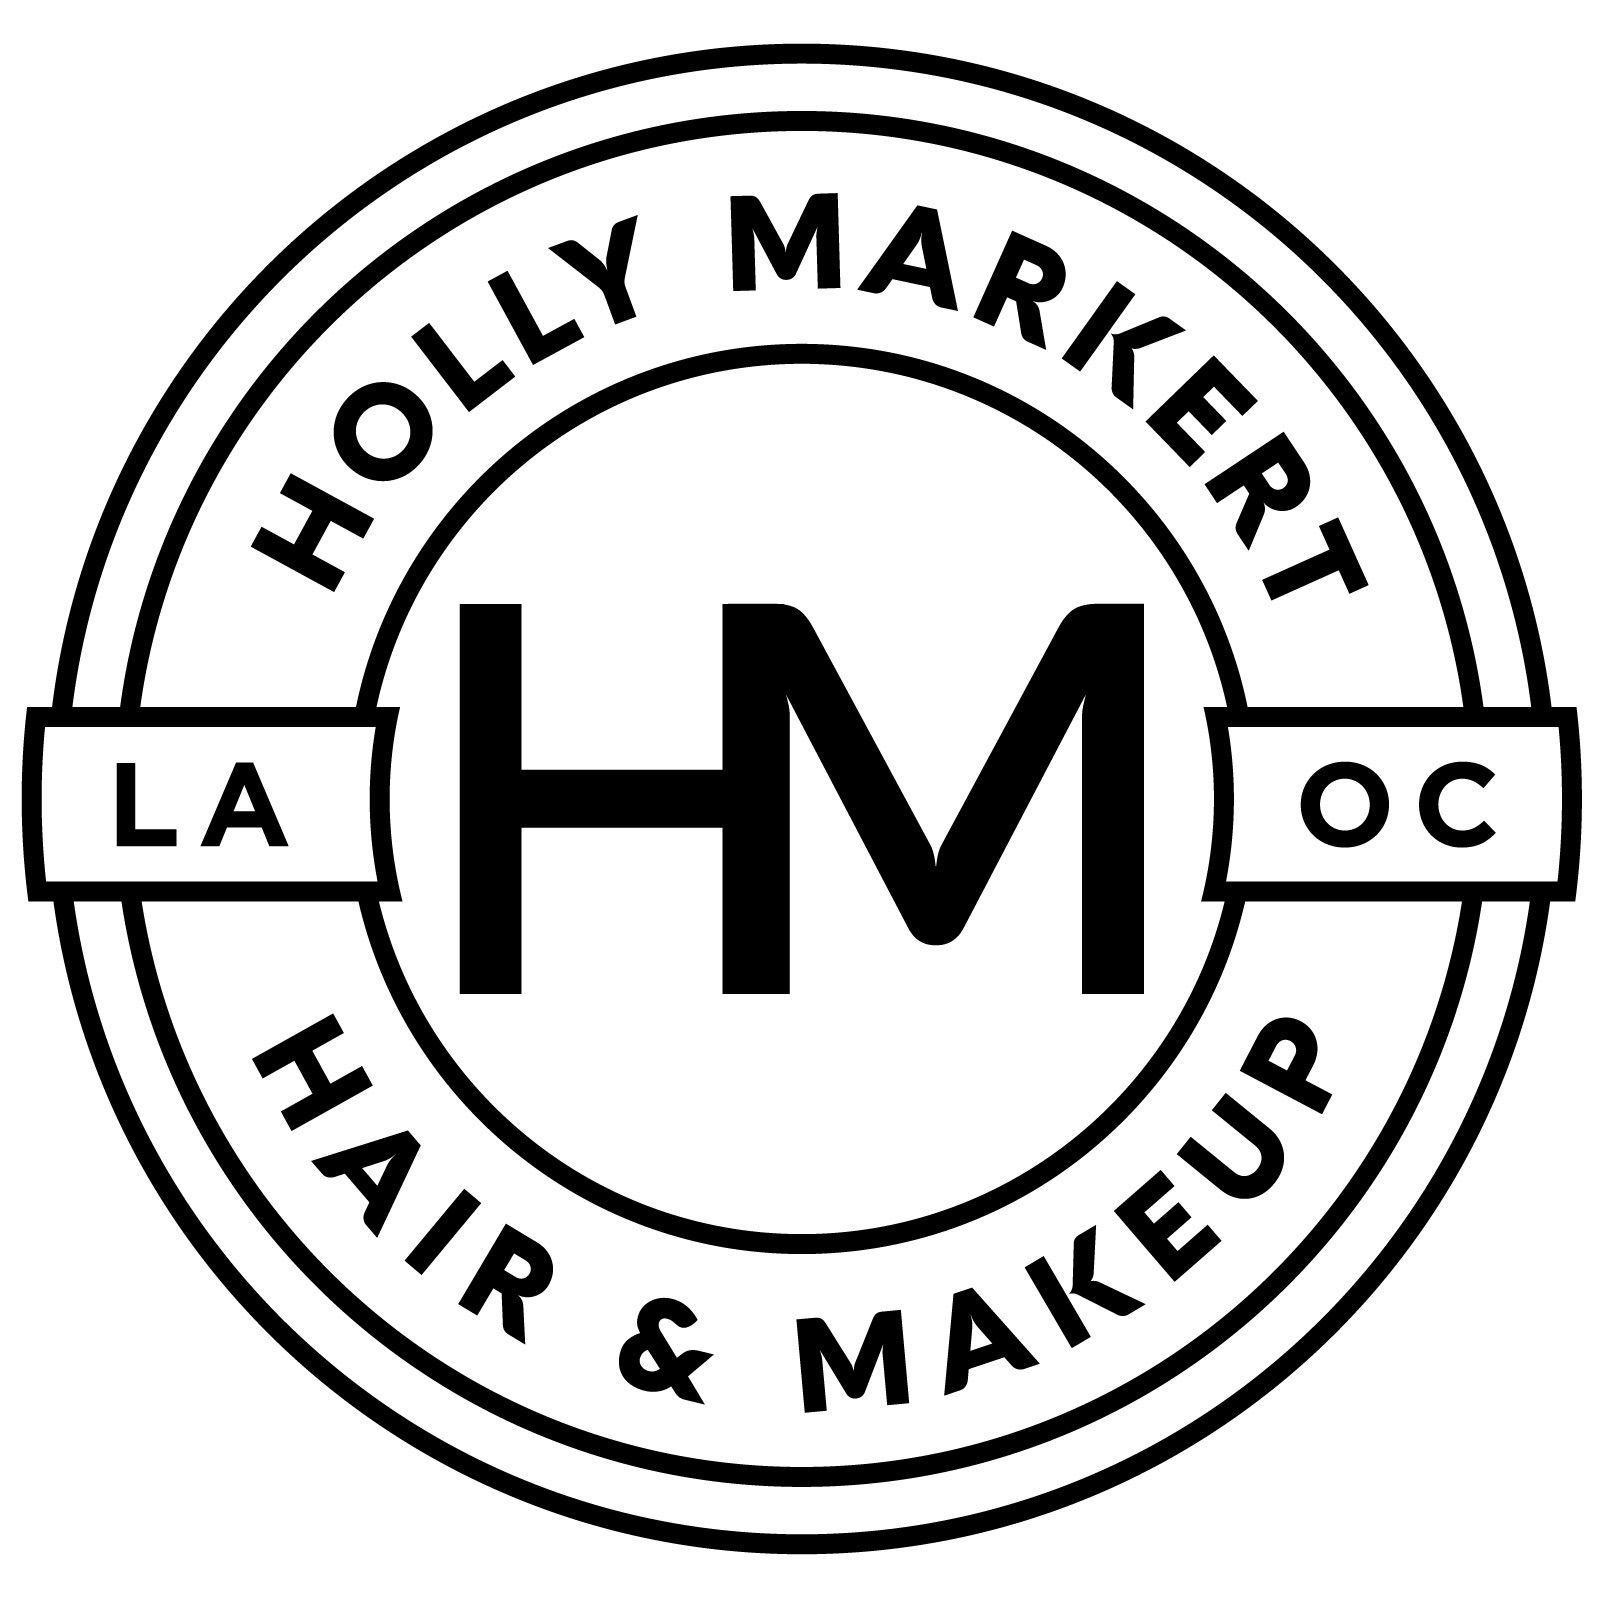 Holly Markert, 715 Yarmouth Rd, Palos Verdes Estates, 90274